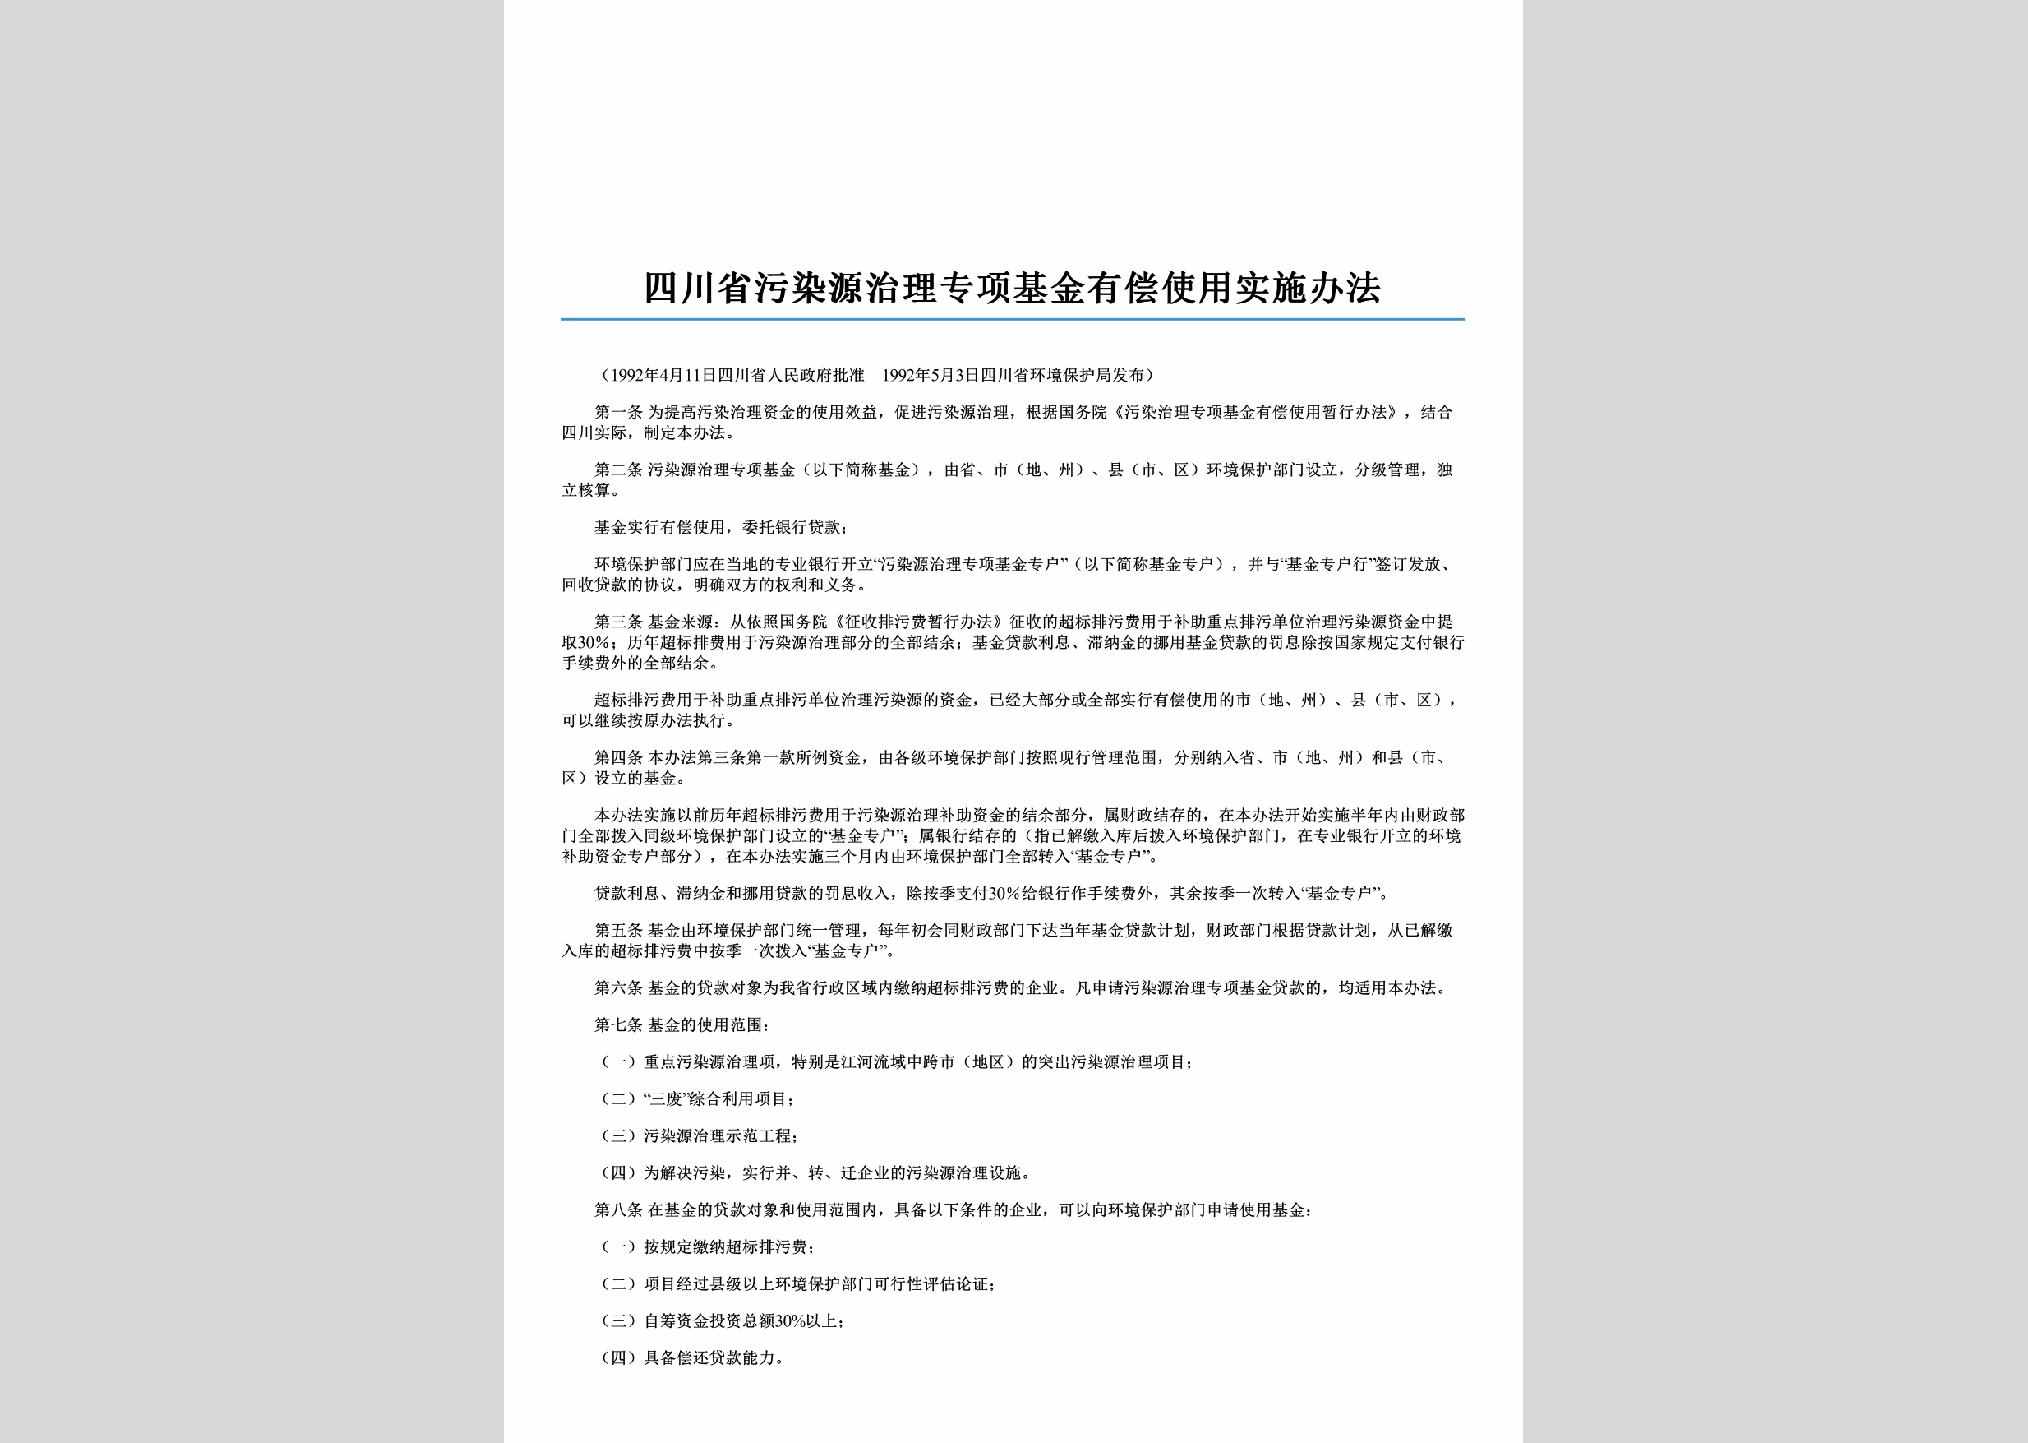 SC-WRZLSSBF-2006：四川省污染源治理专项基金有偿使用实施办法